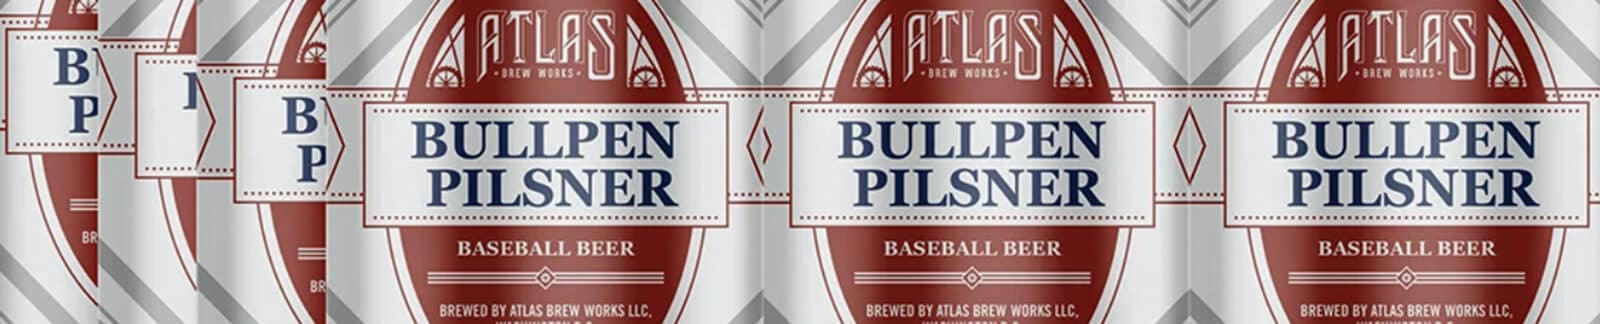 Bullpen Pilsner by Atlas Brew Works header